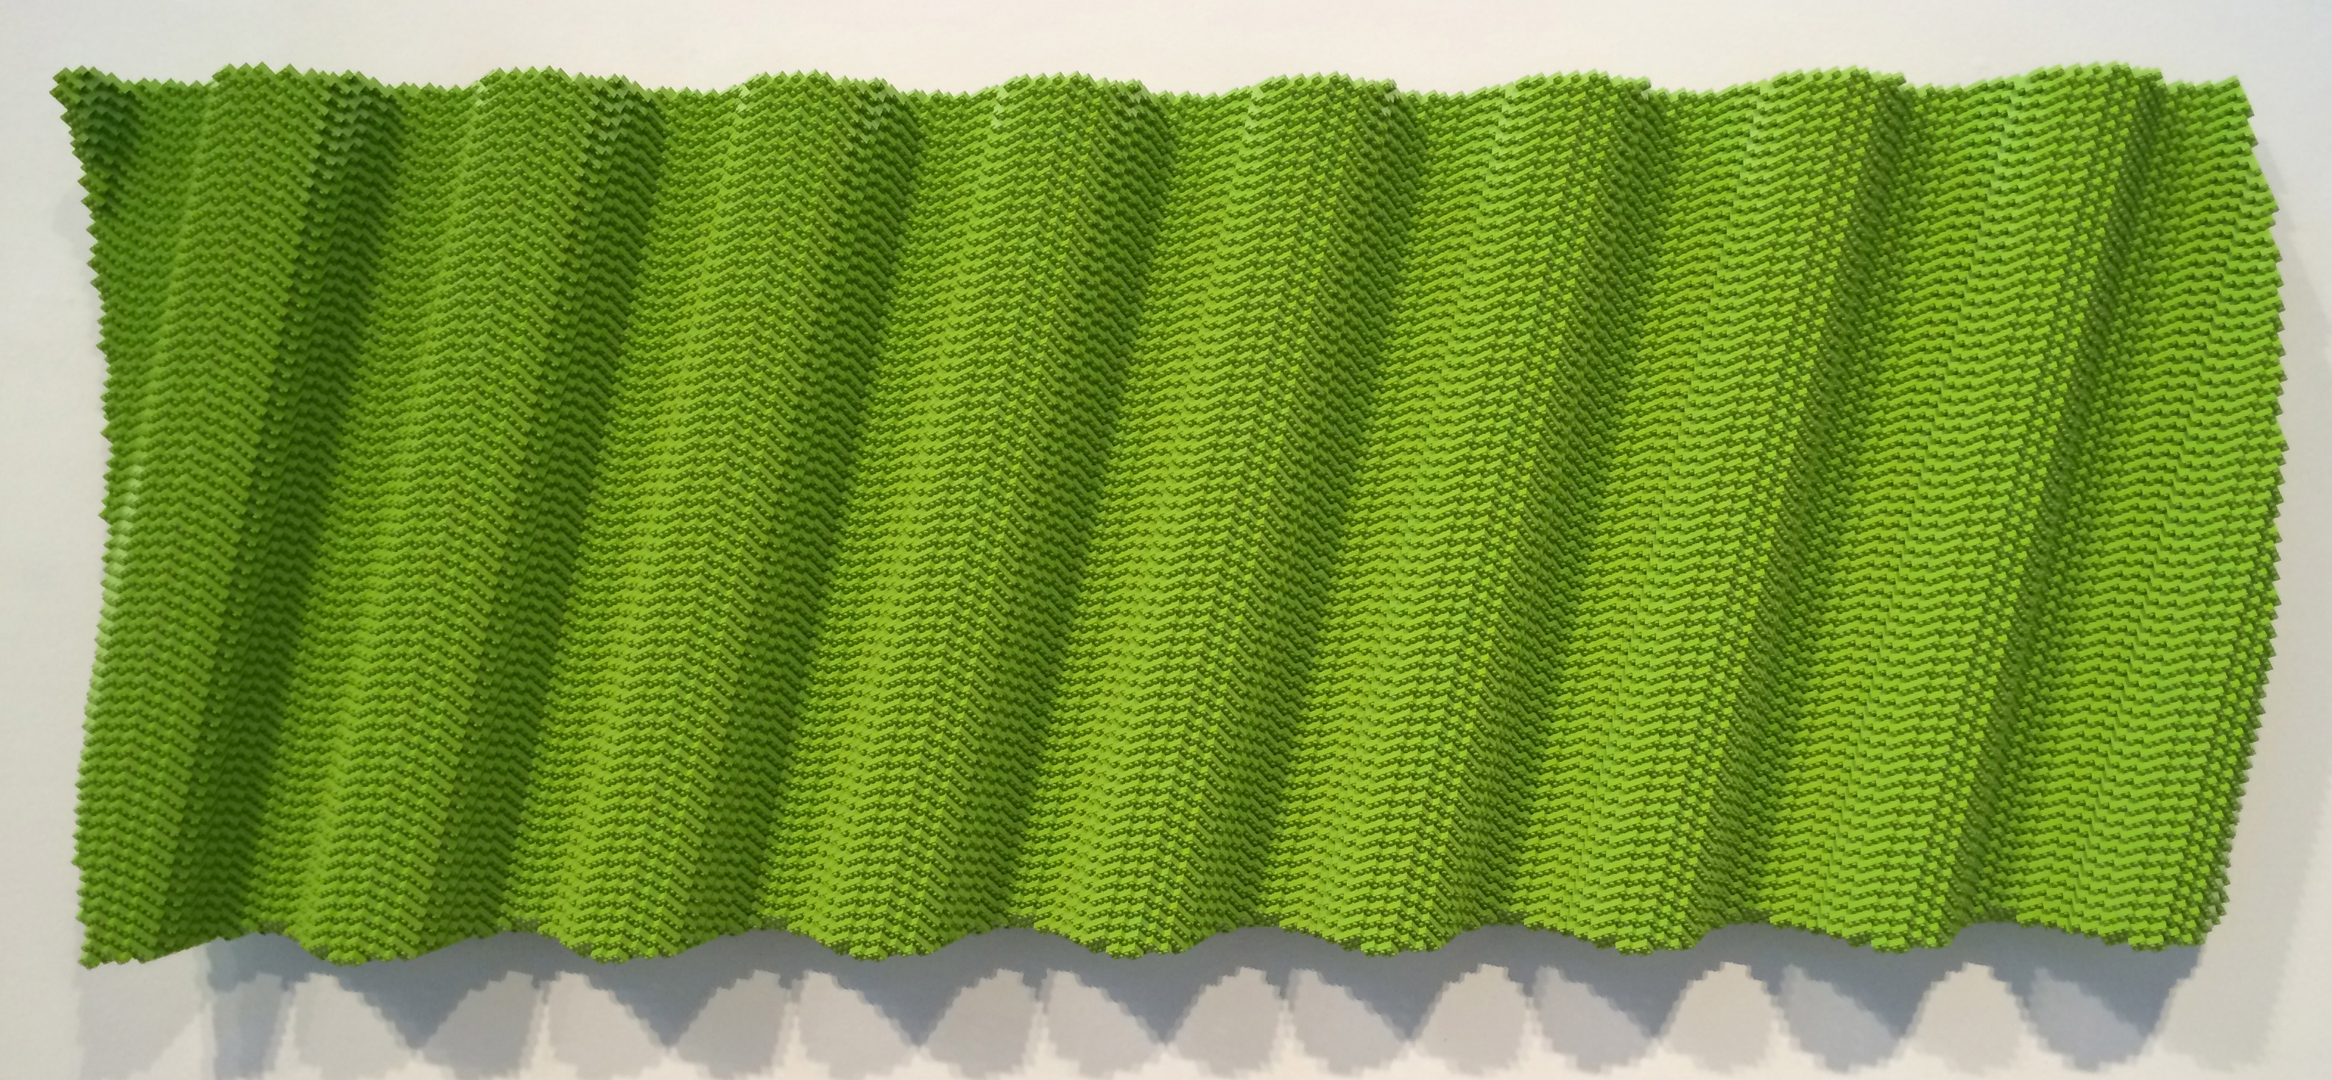 Green Curtain 2014